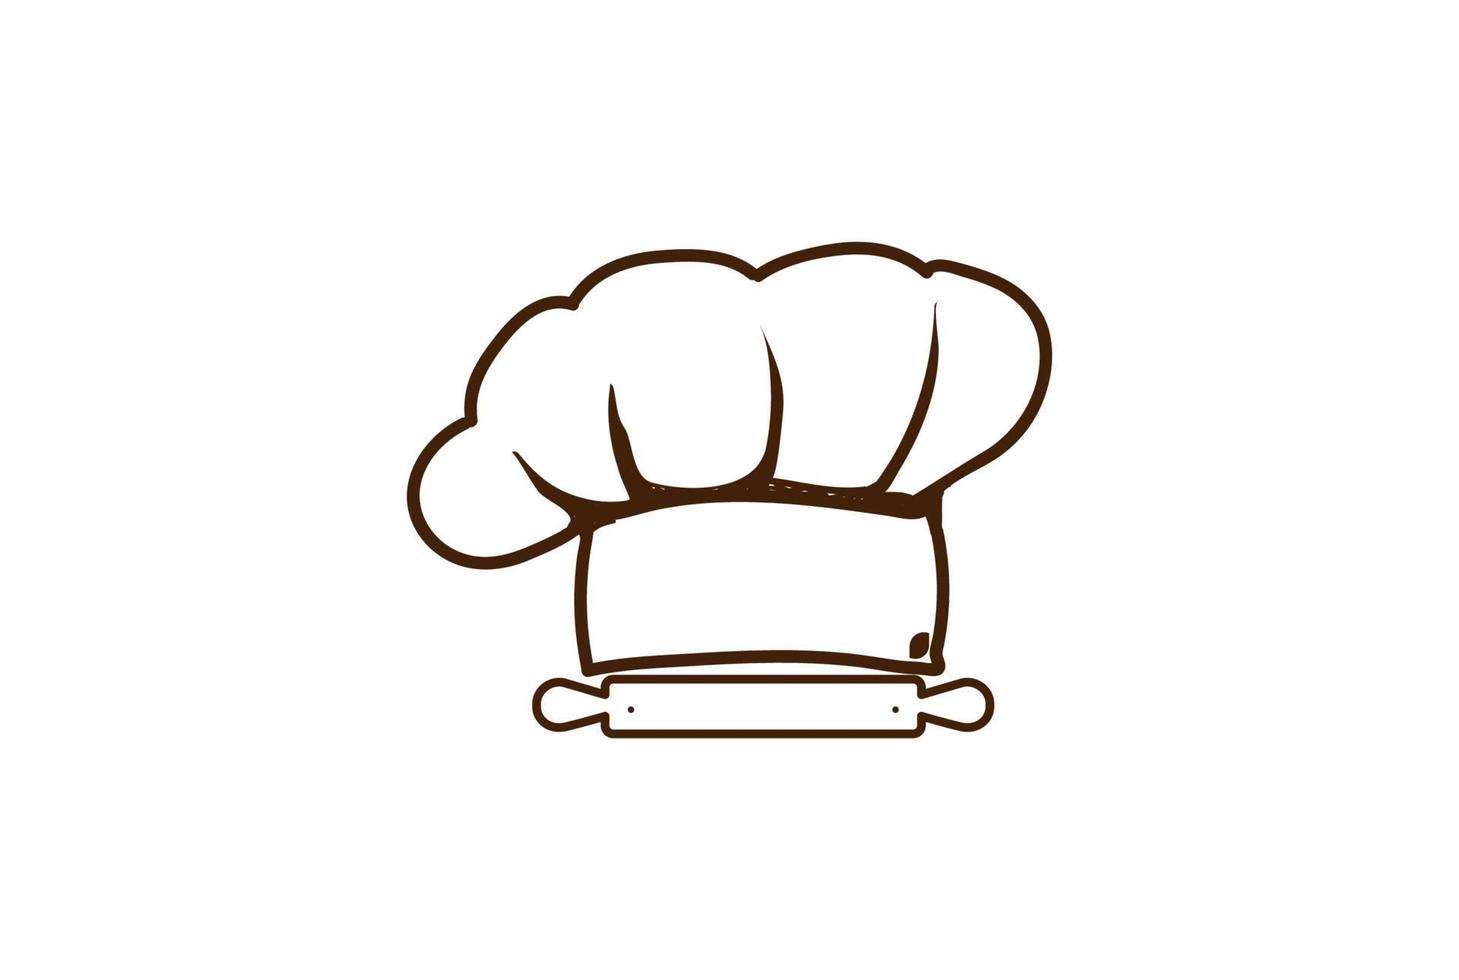 cappello da chef ristorante cucina tipografia logo design vector 4848622  Arte vettoriale a Vecteezy